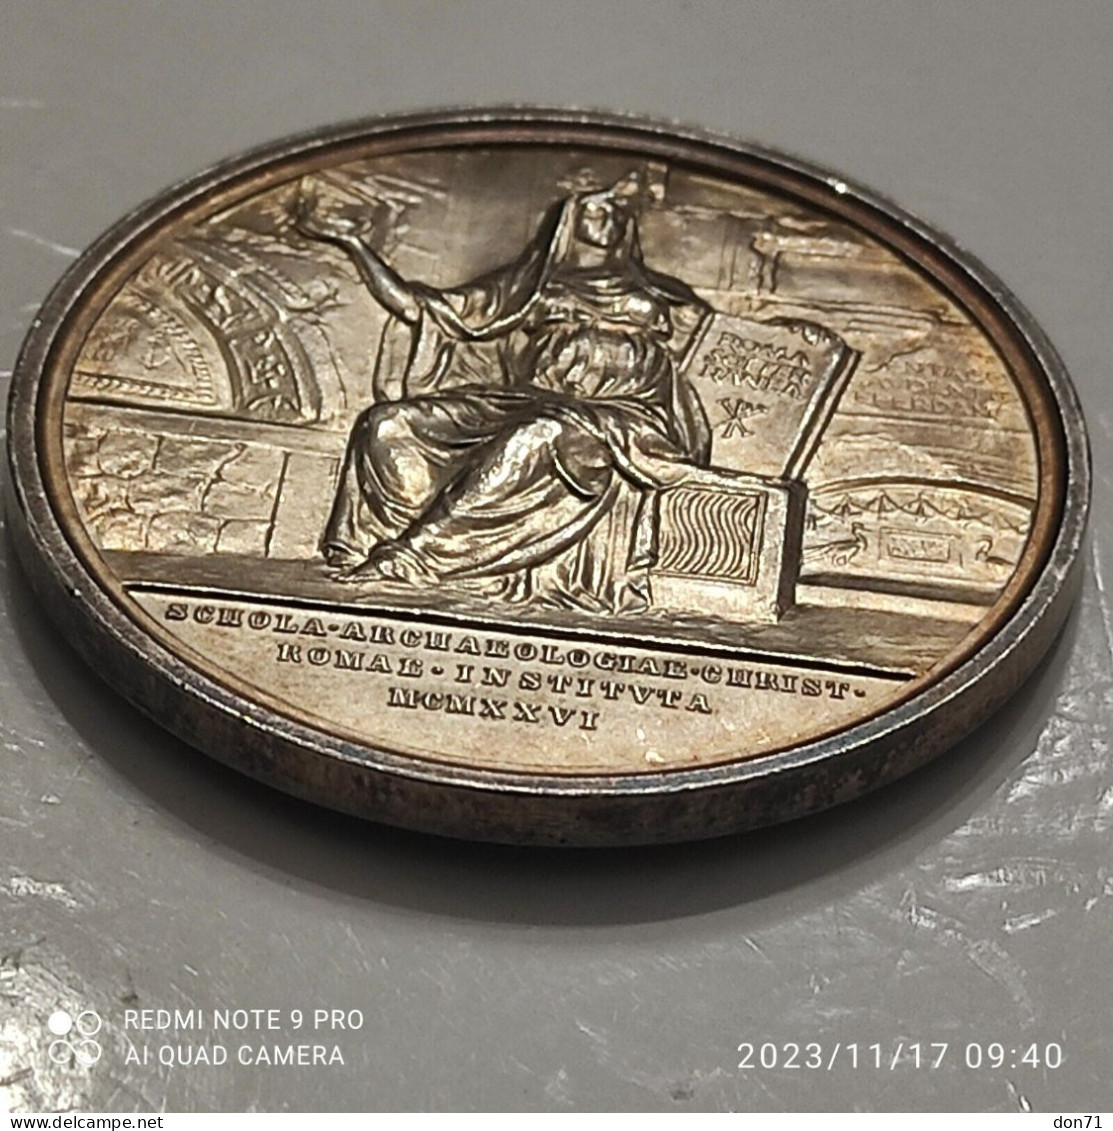 Vaticano - Pio XI medaglia AG